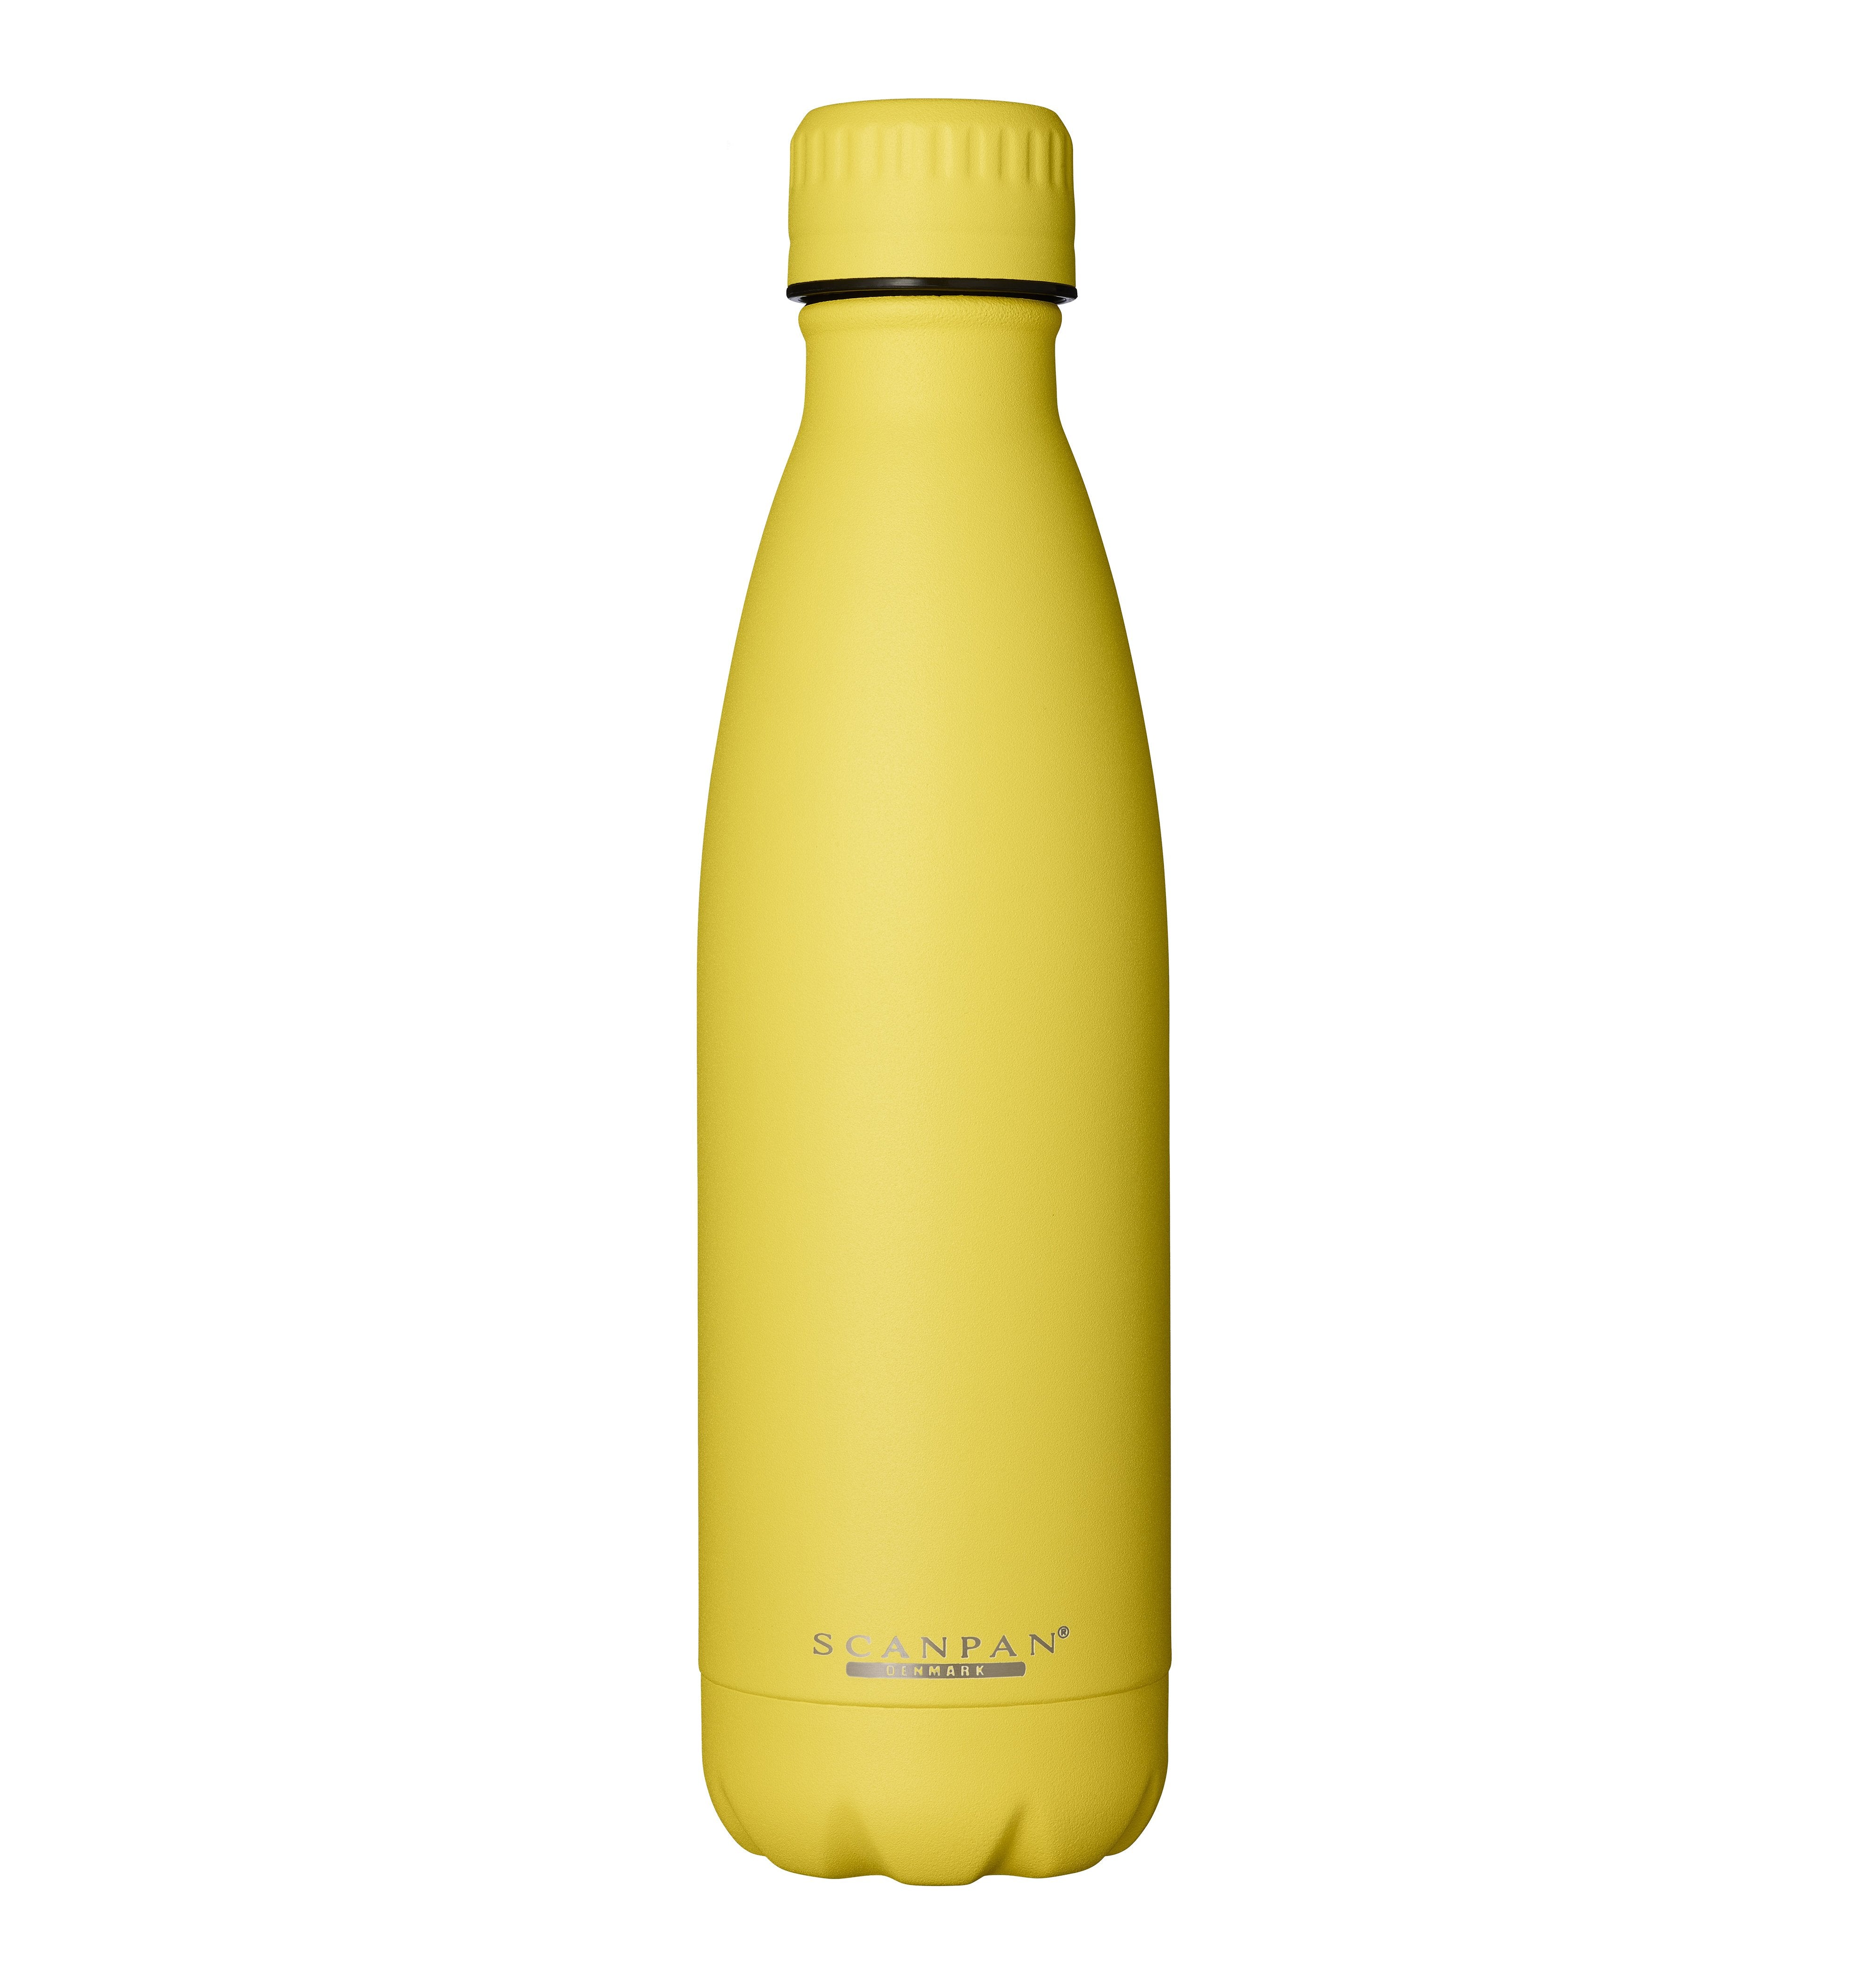 SCANPAN To Go 500ml Bottle - Primrose Yellow